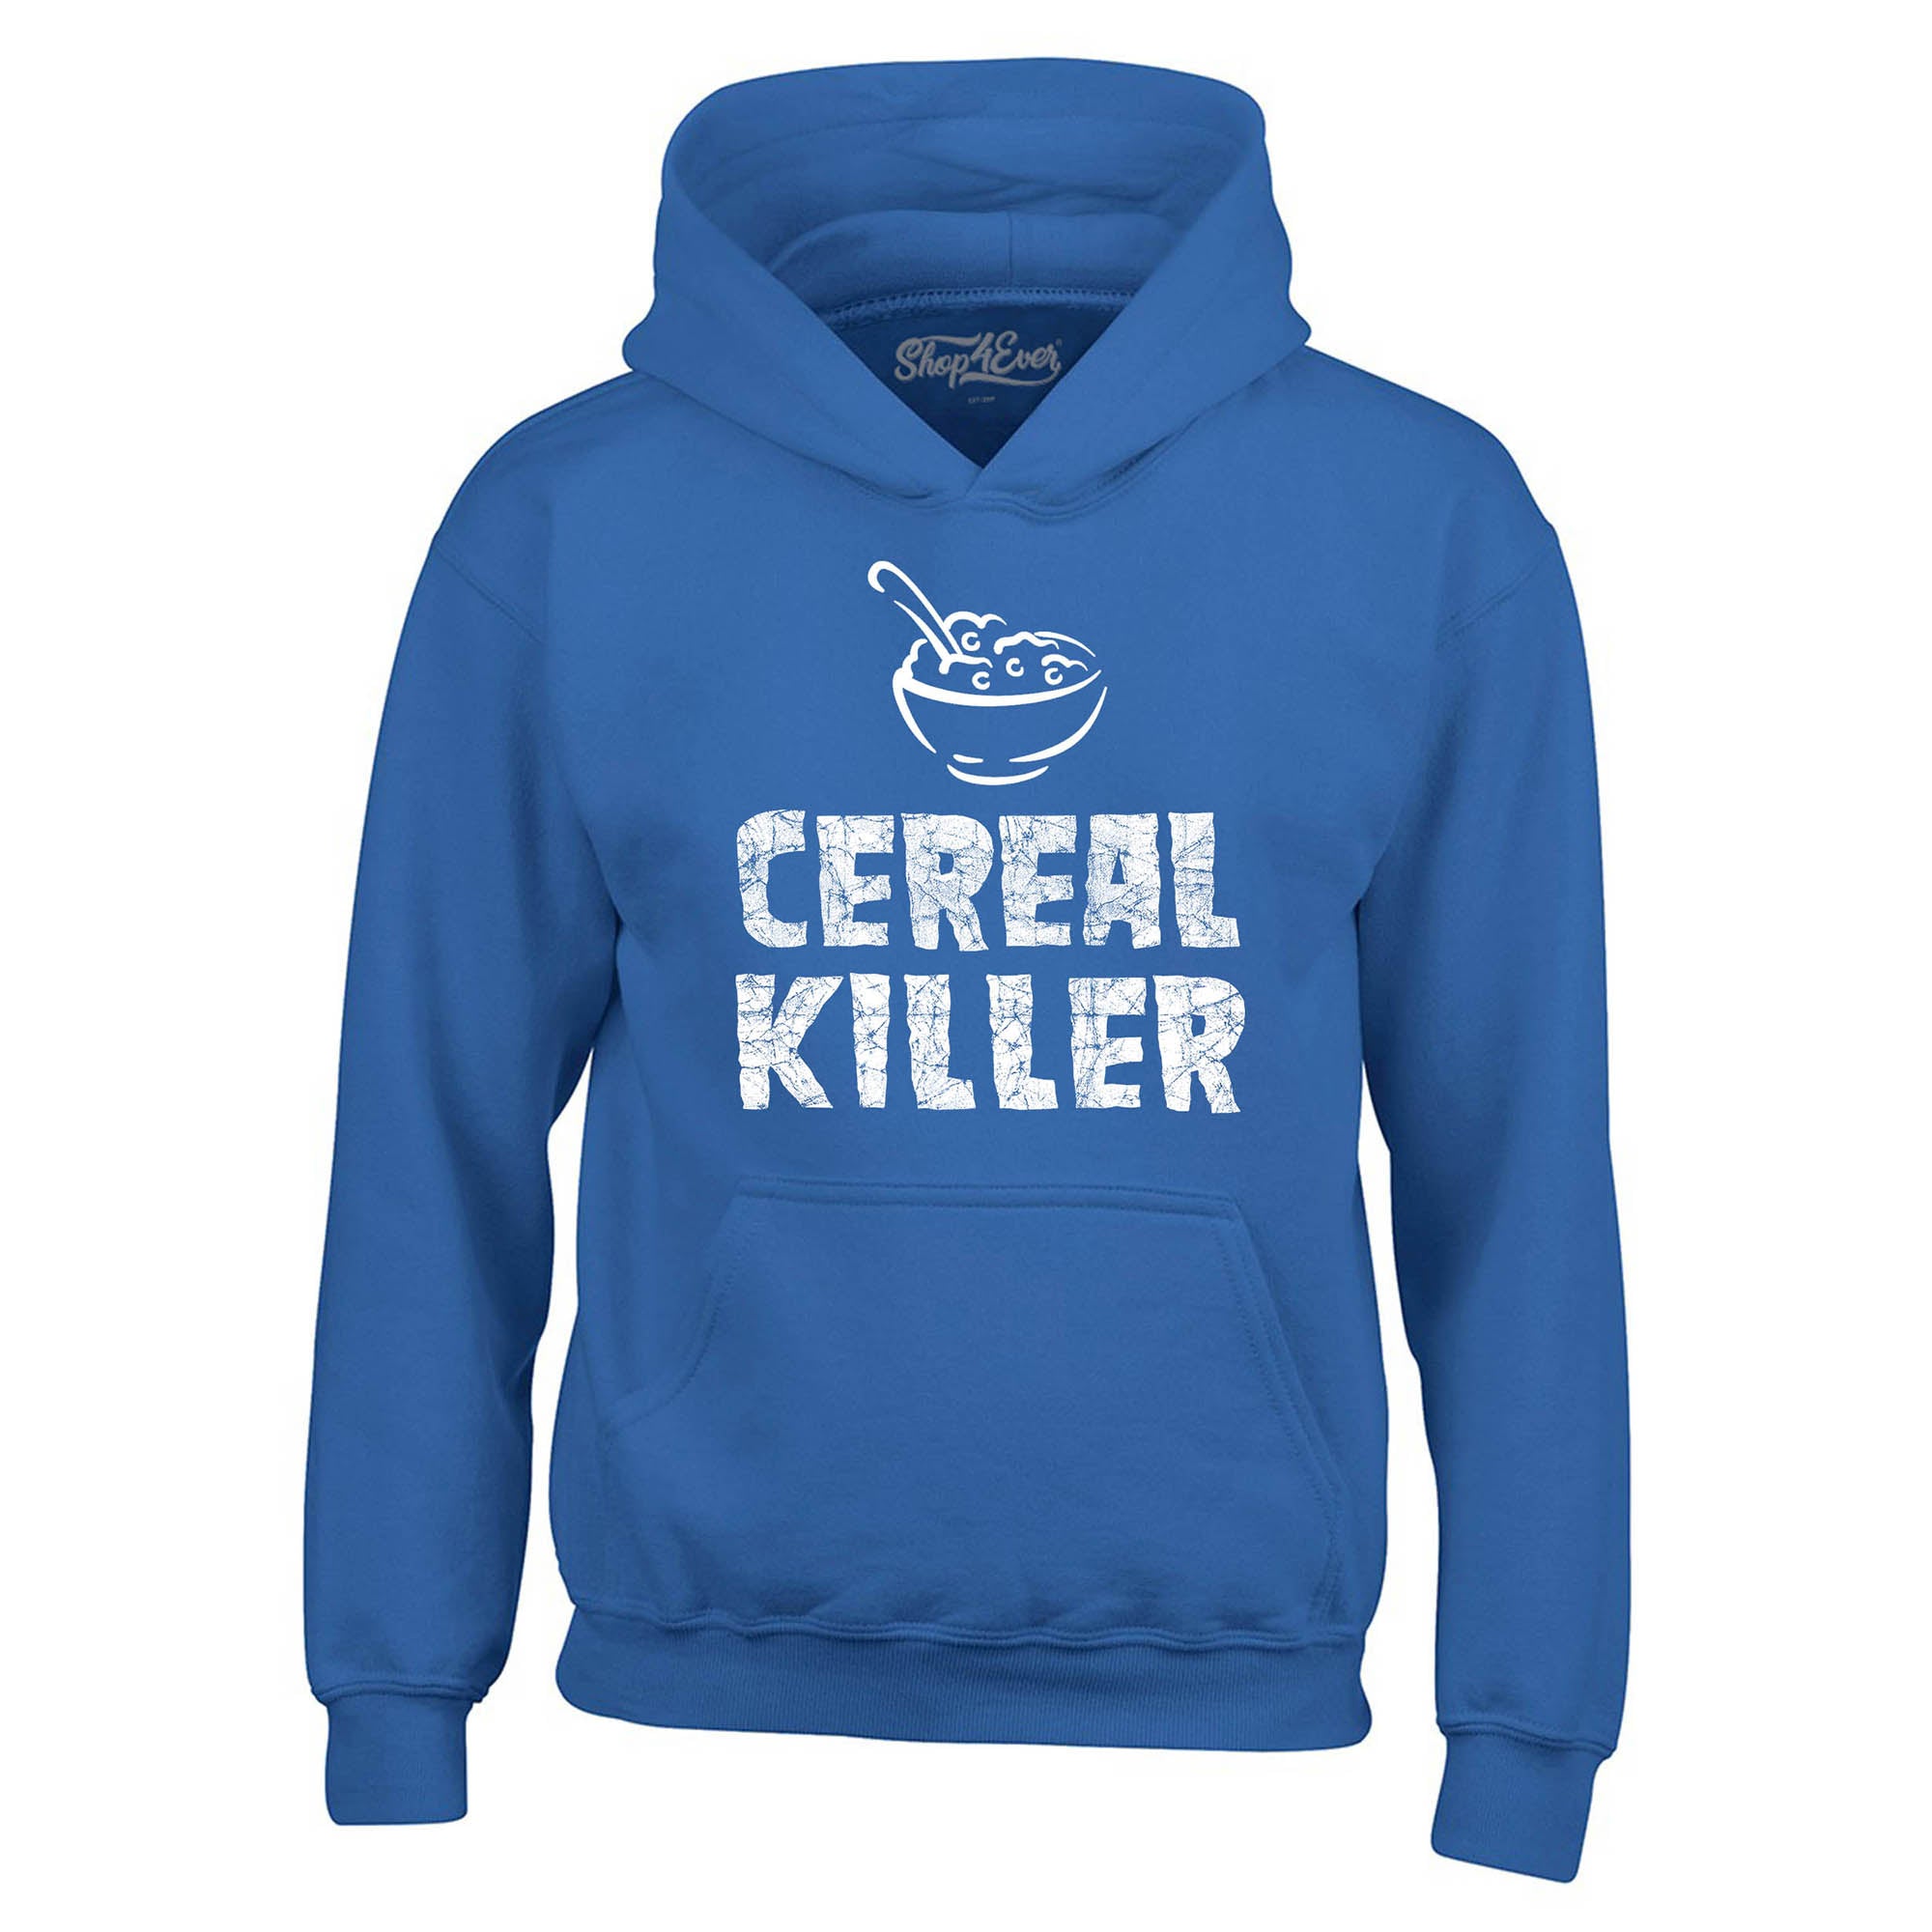 Cereal Killer Hoodies Funny Sweatshirts